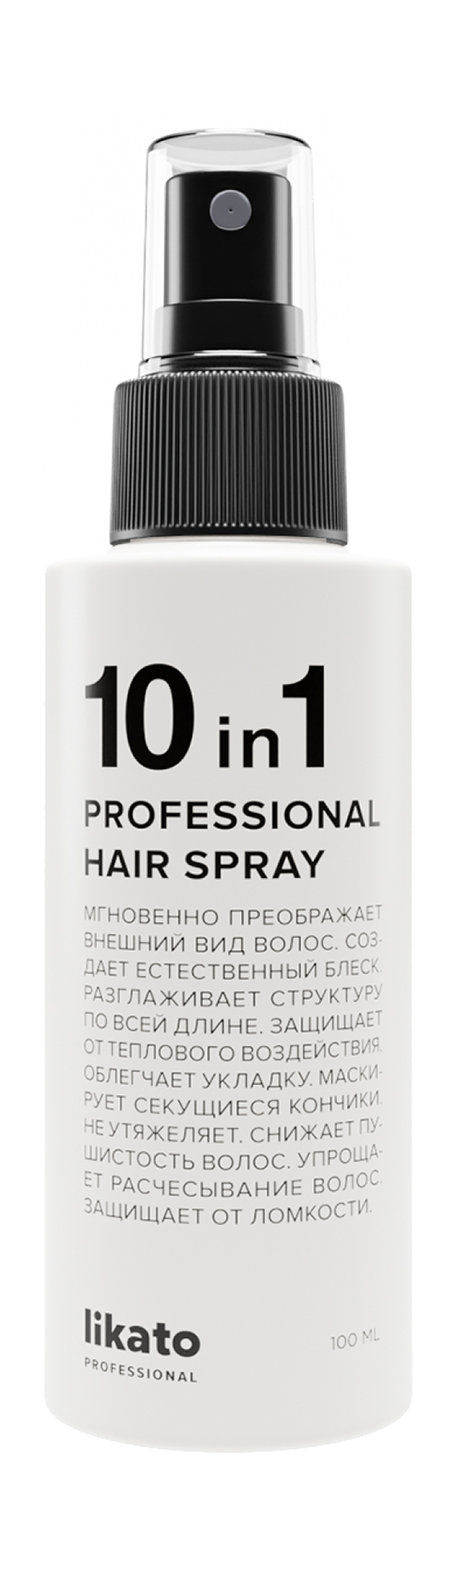 likato professional 10-in-1 professional hair spray